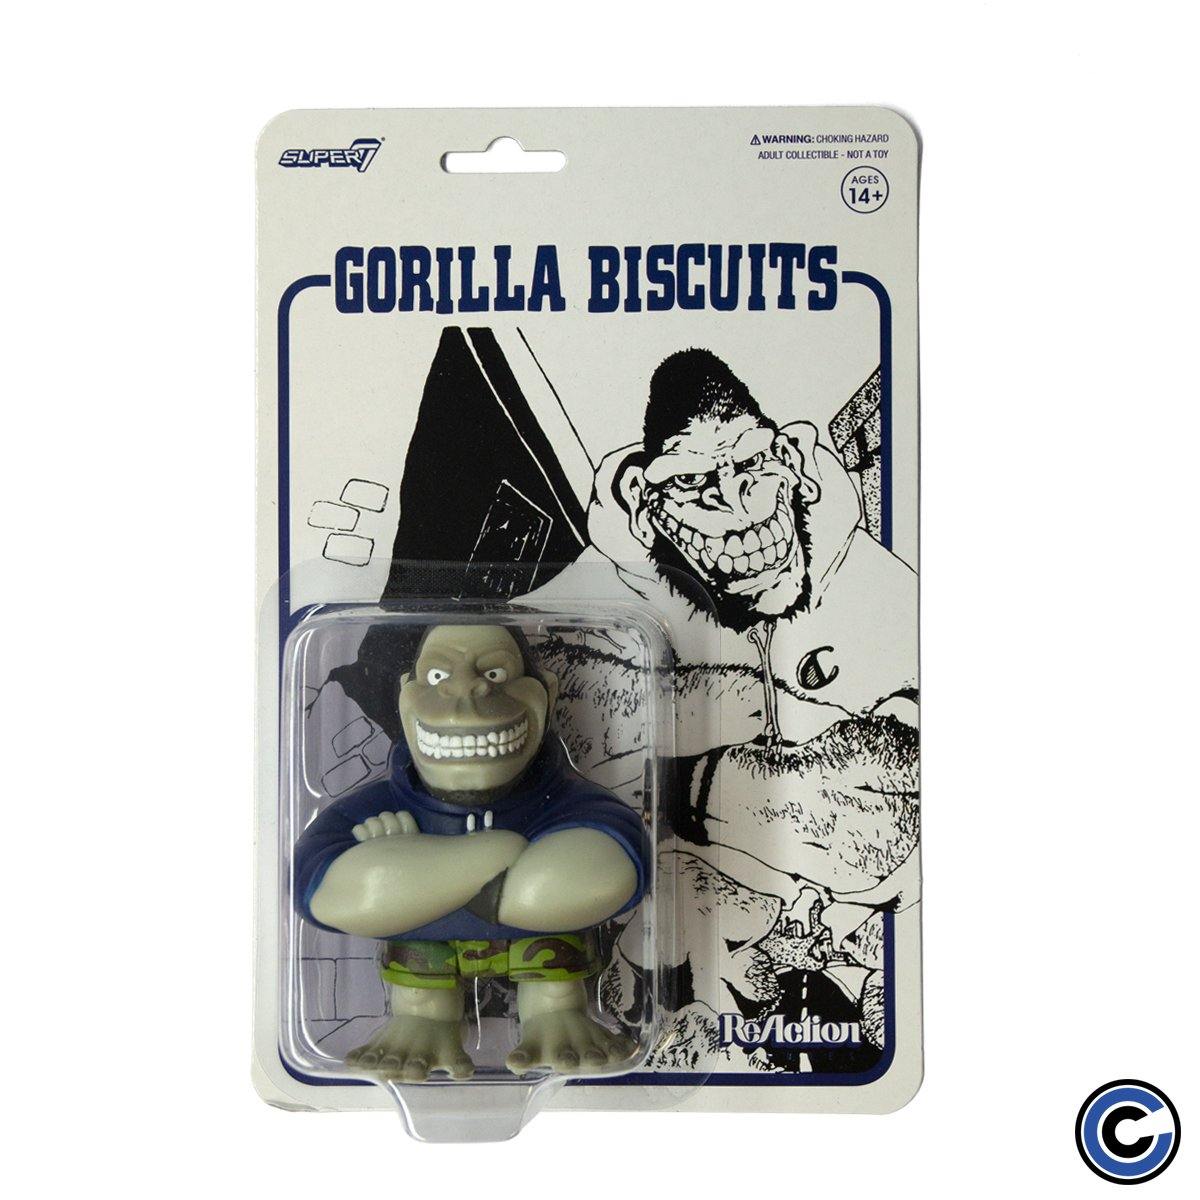 Buy – Gorilla Biscuits "Gorilla" Action Figure – Band & Music Merch – Cold Cuts Merch